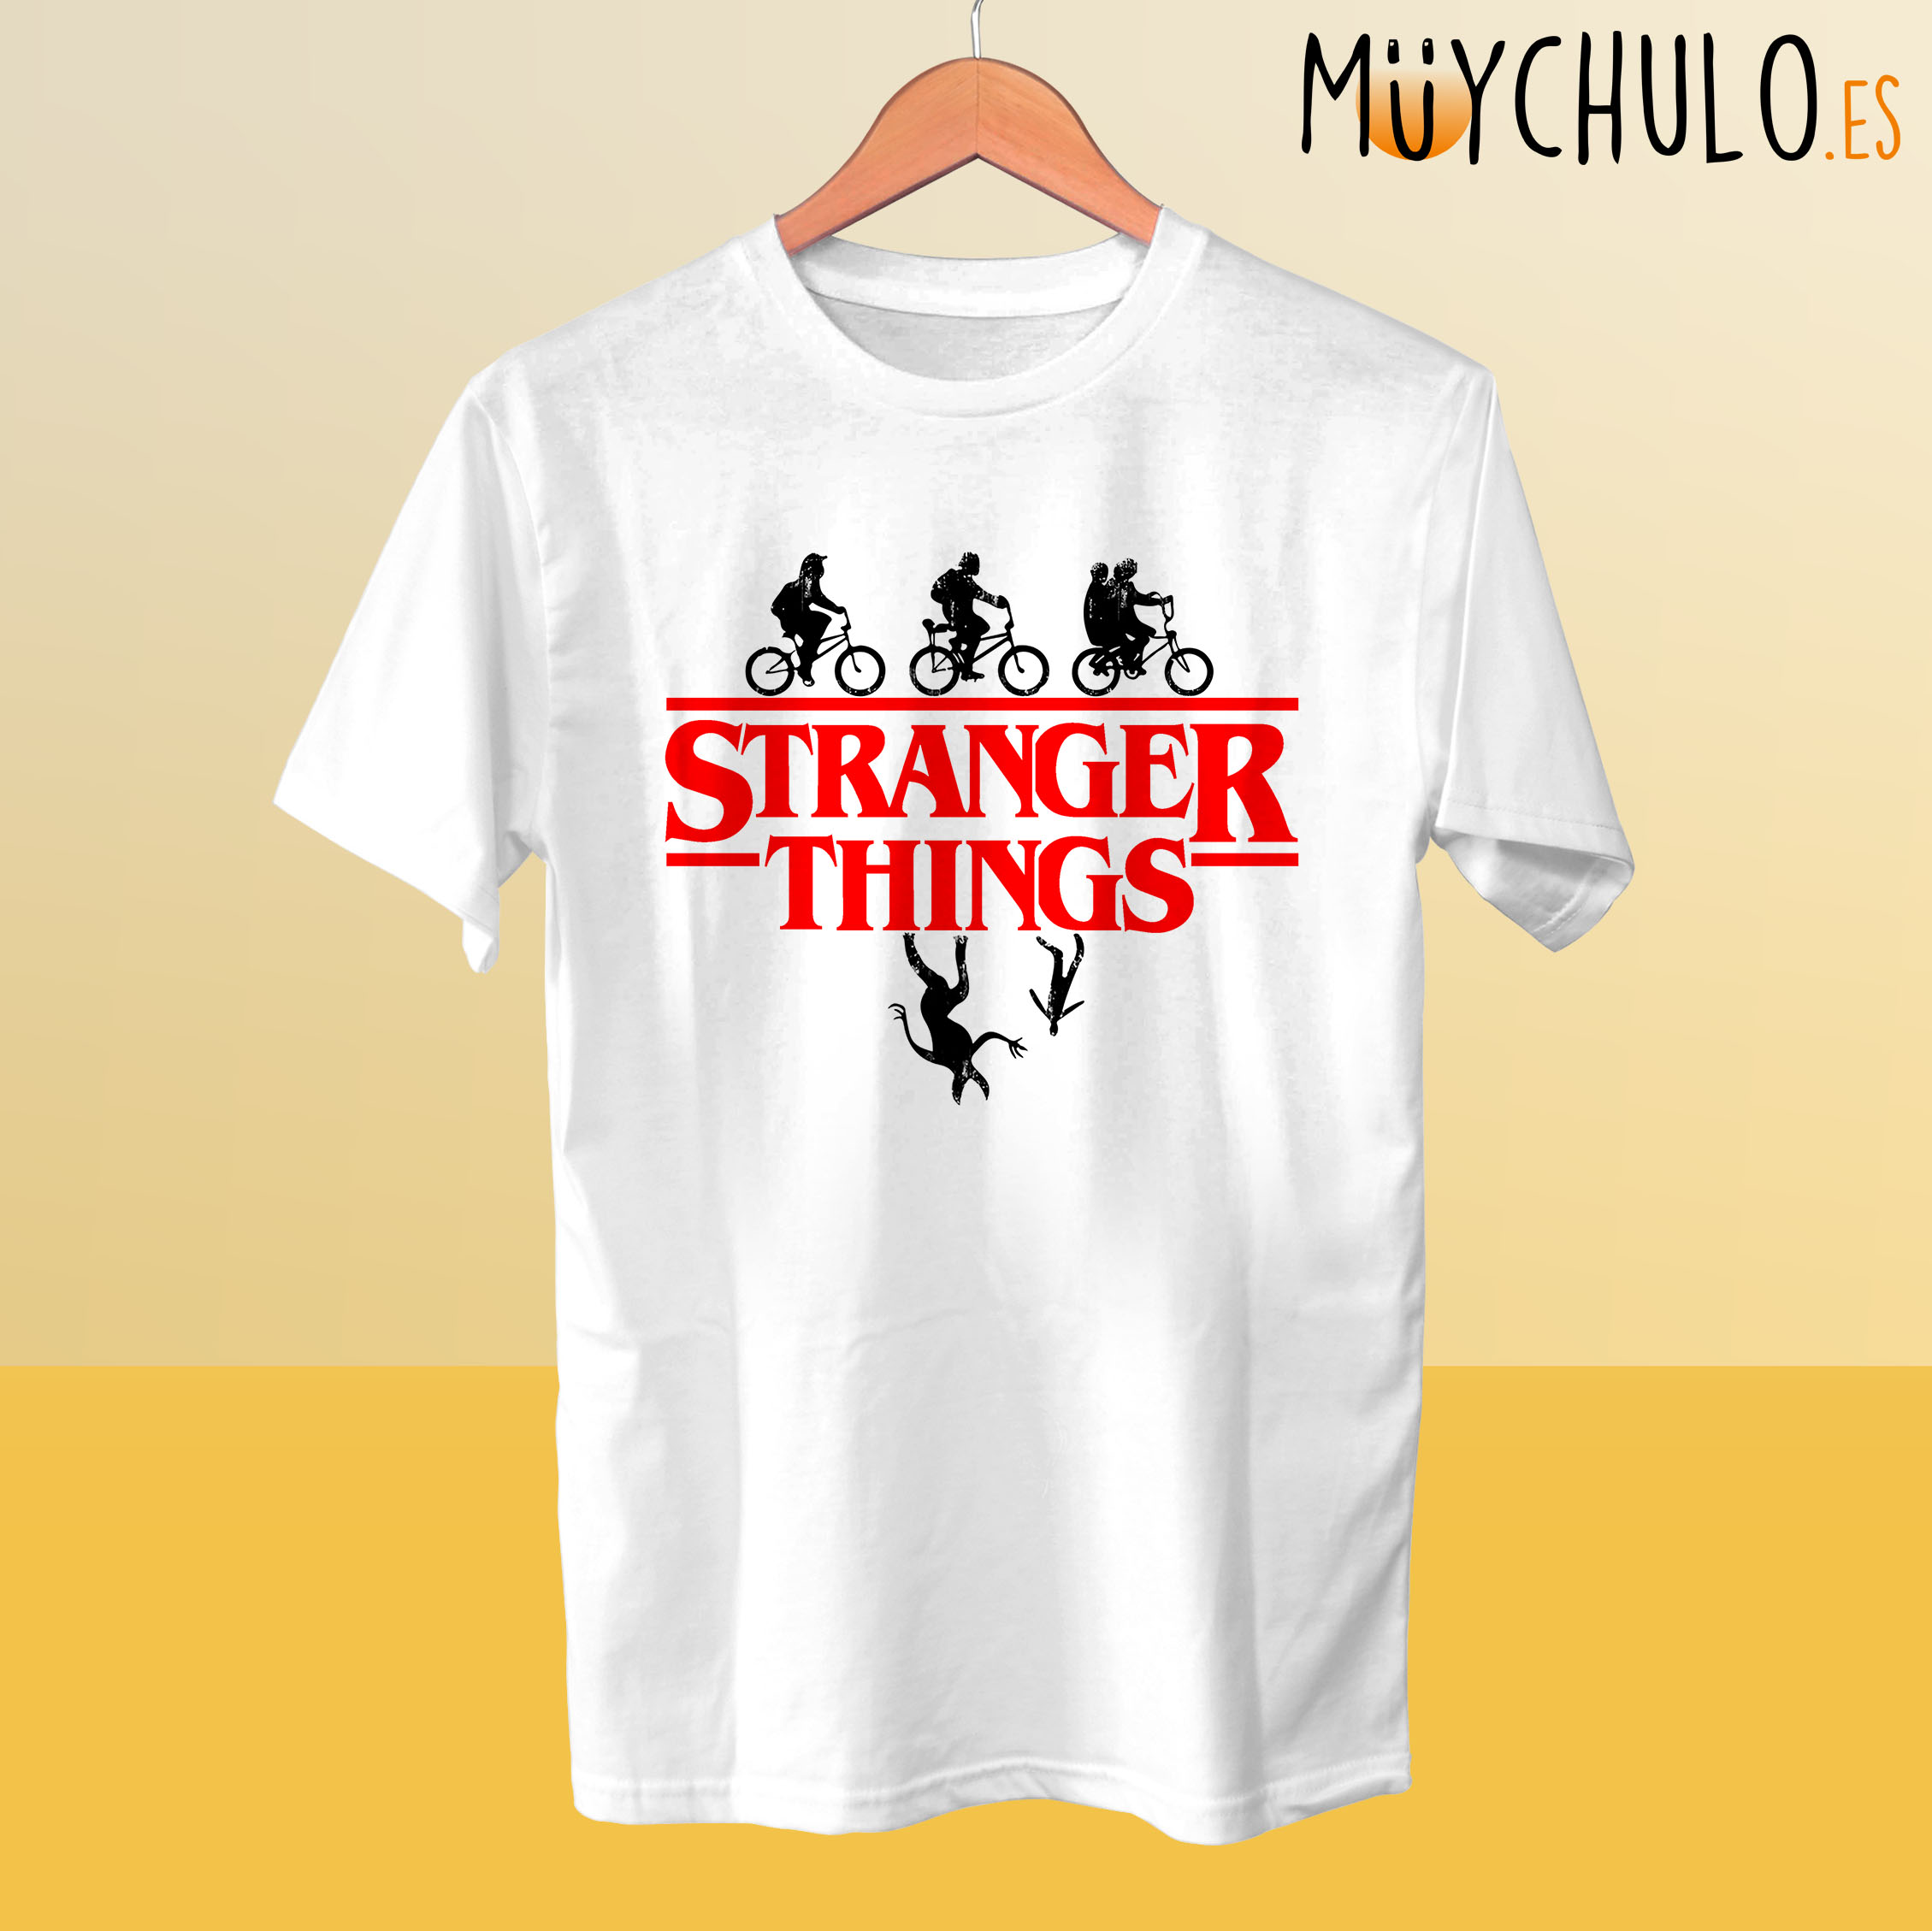 Camiseta STRANGER - Muychulo Regalos FRIKI